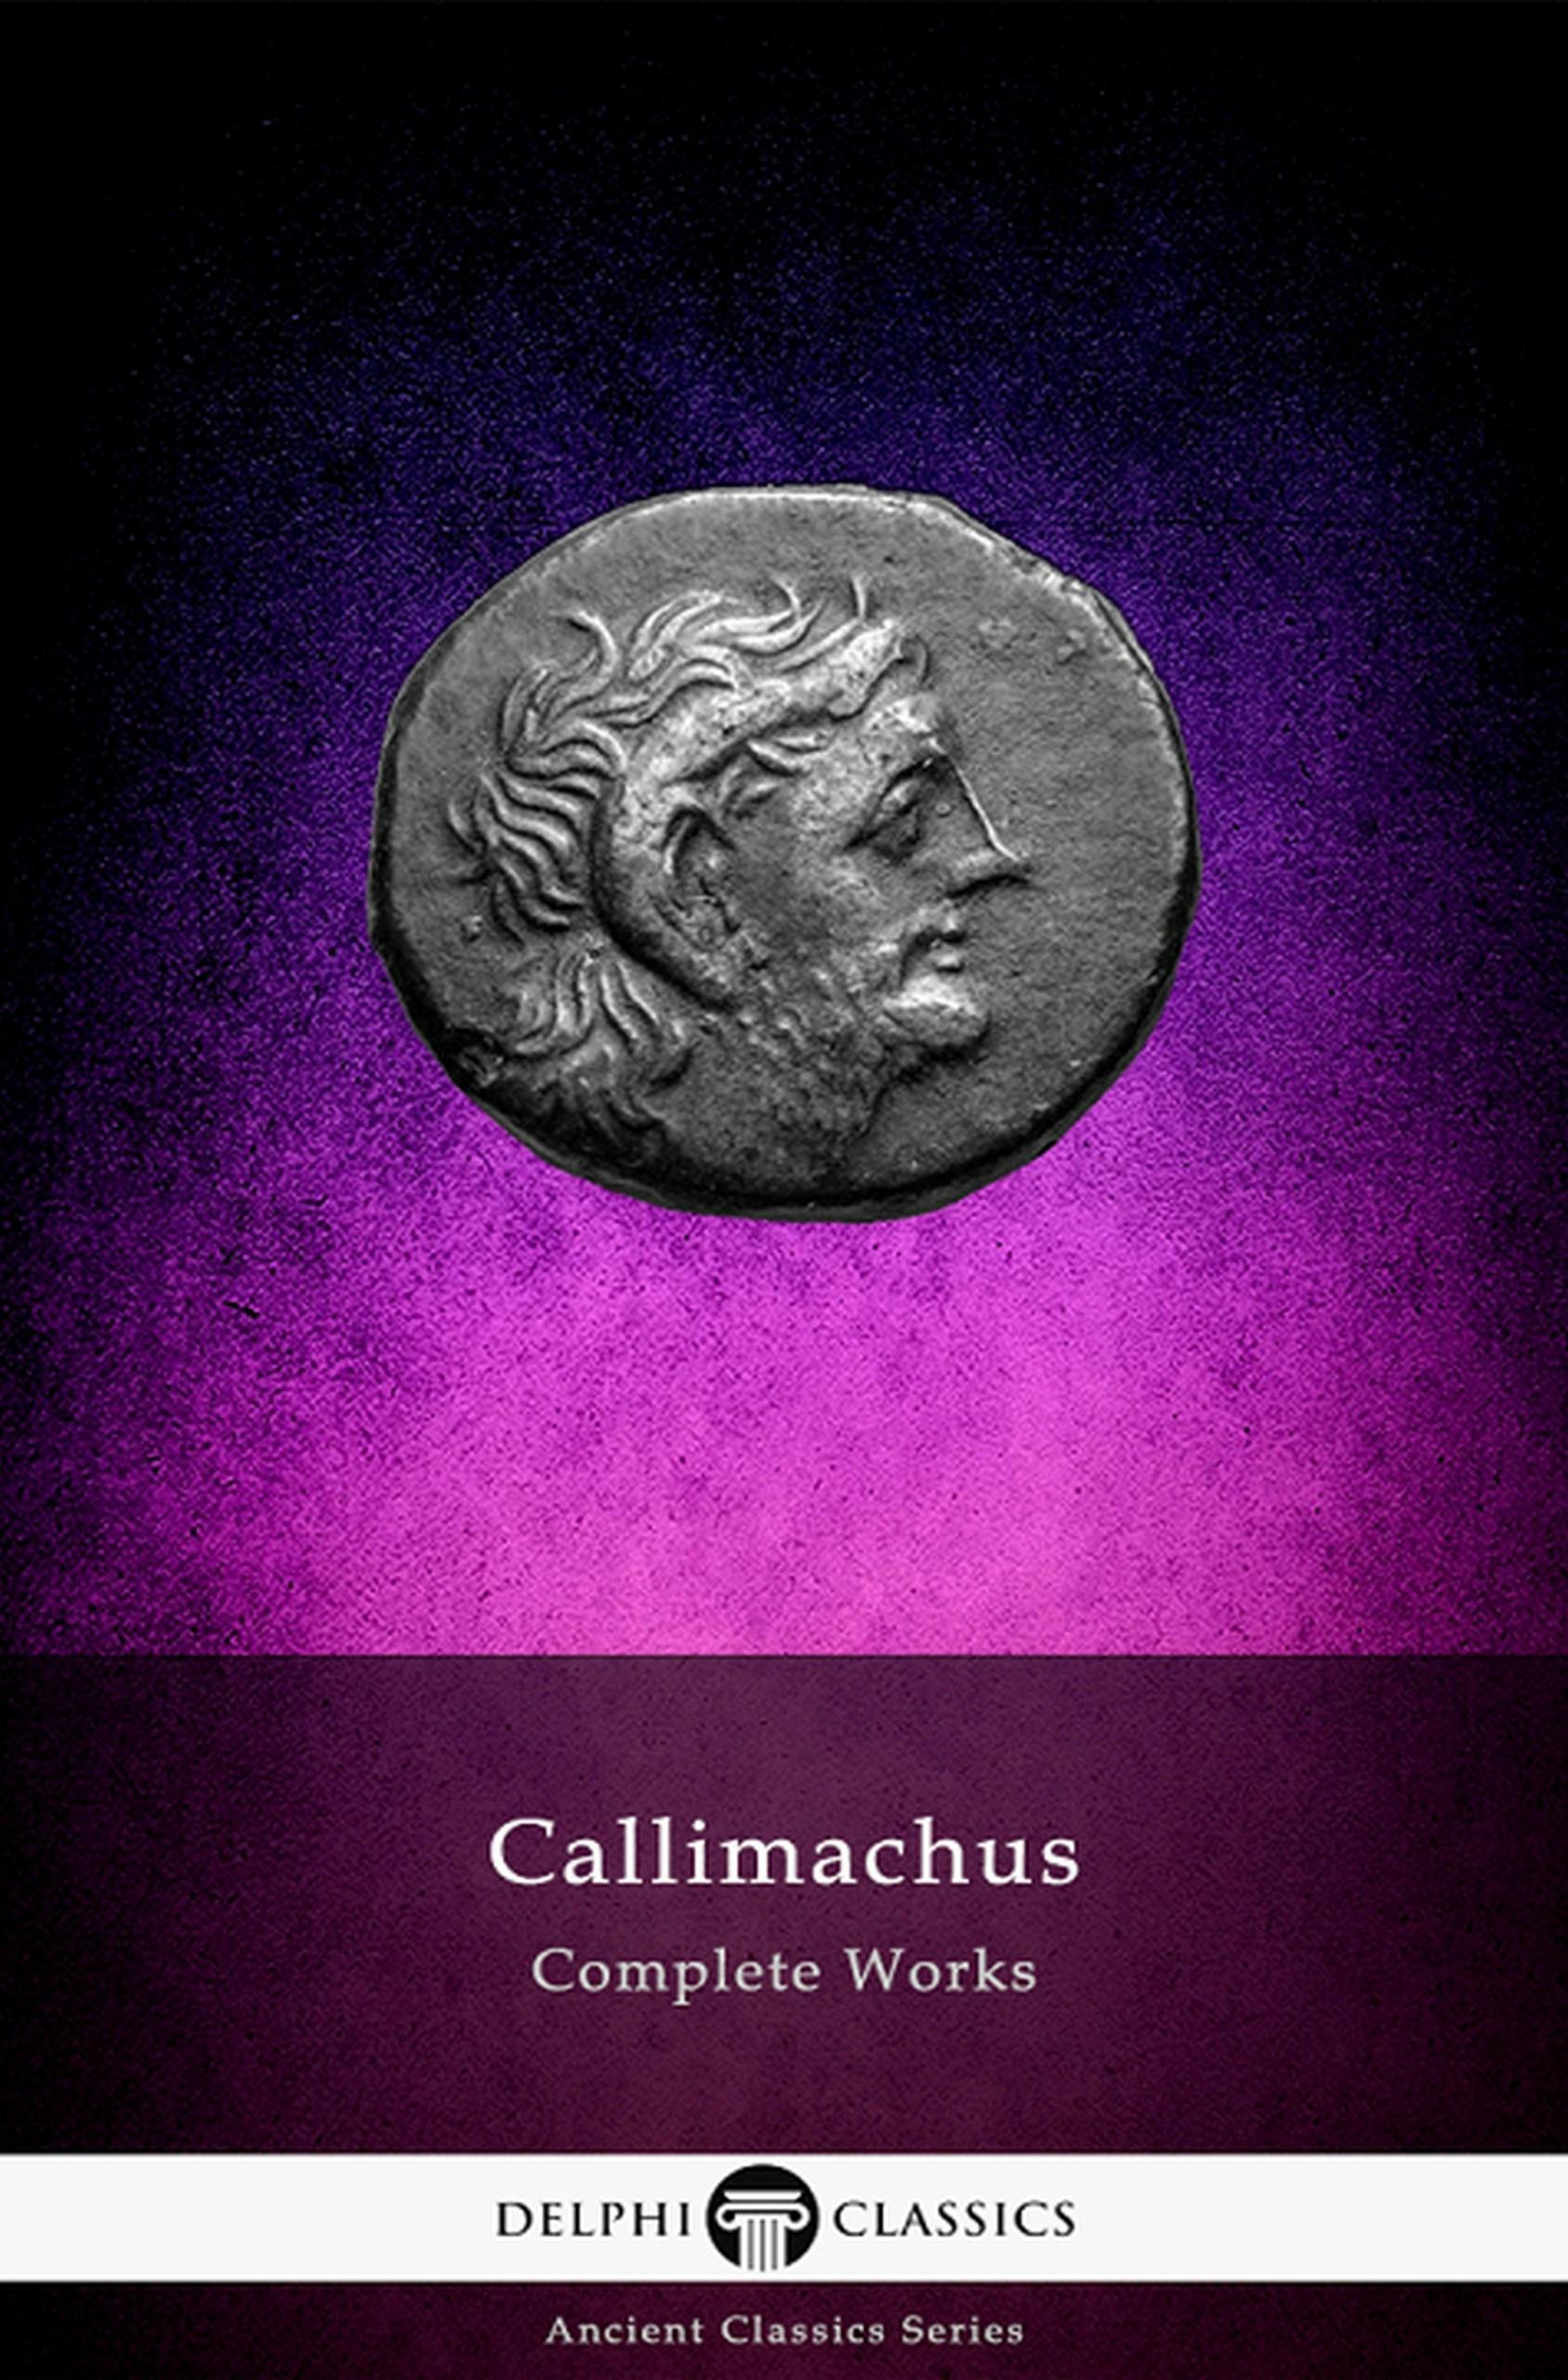 Delphi Complete Works of Callimachus (Illustrated) - Callimachus